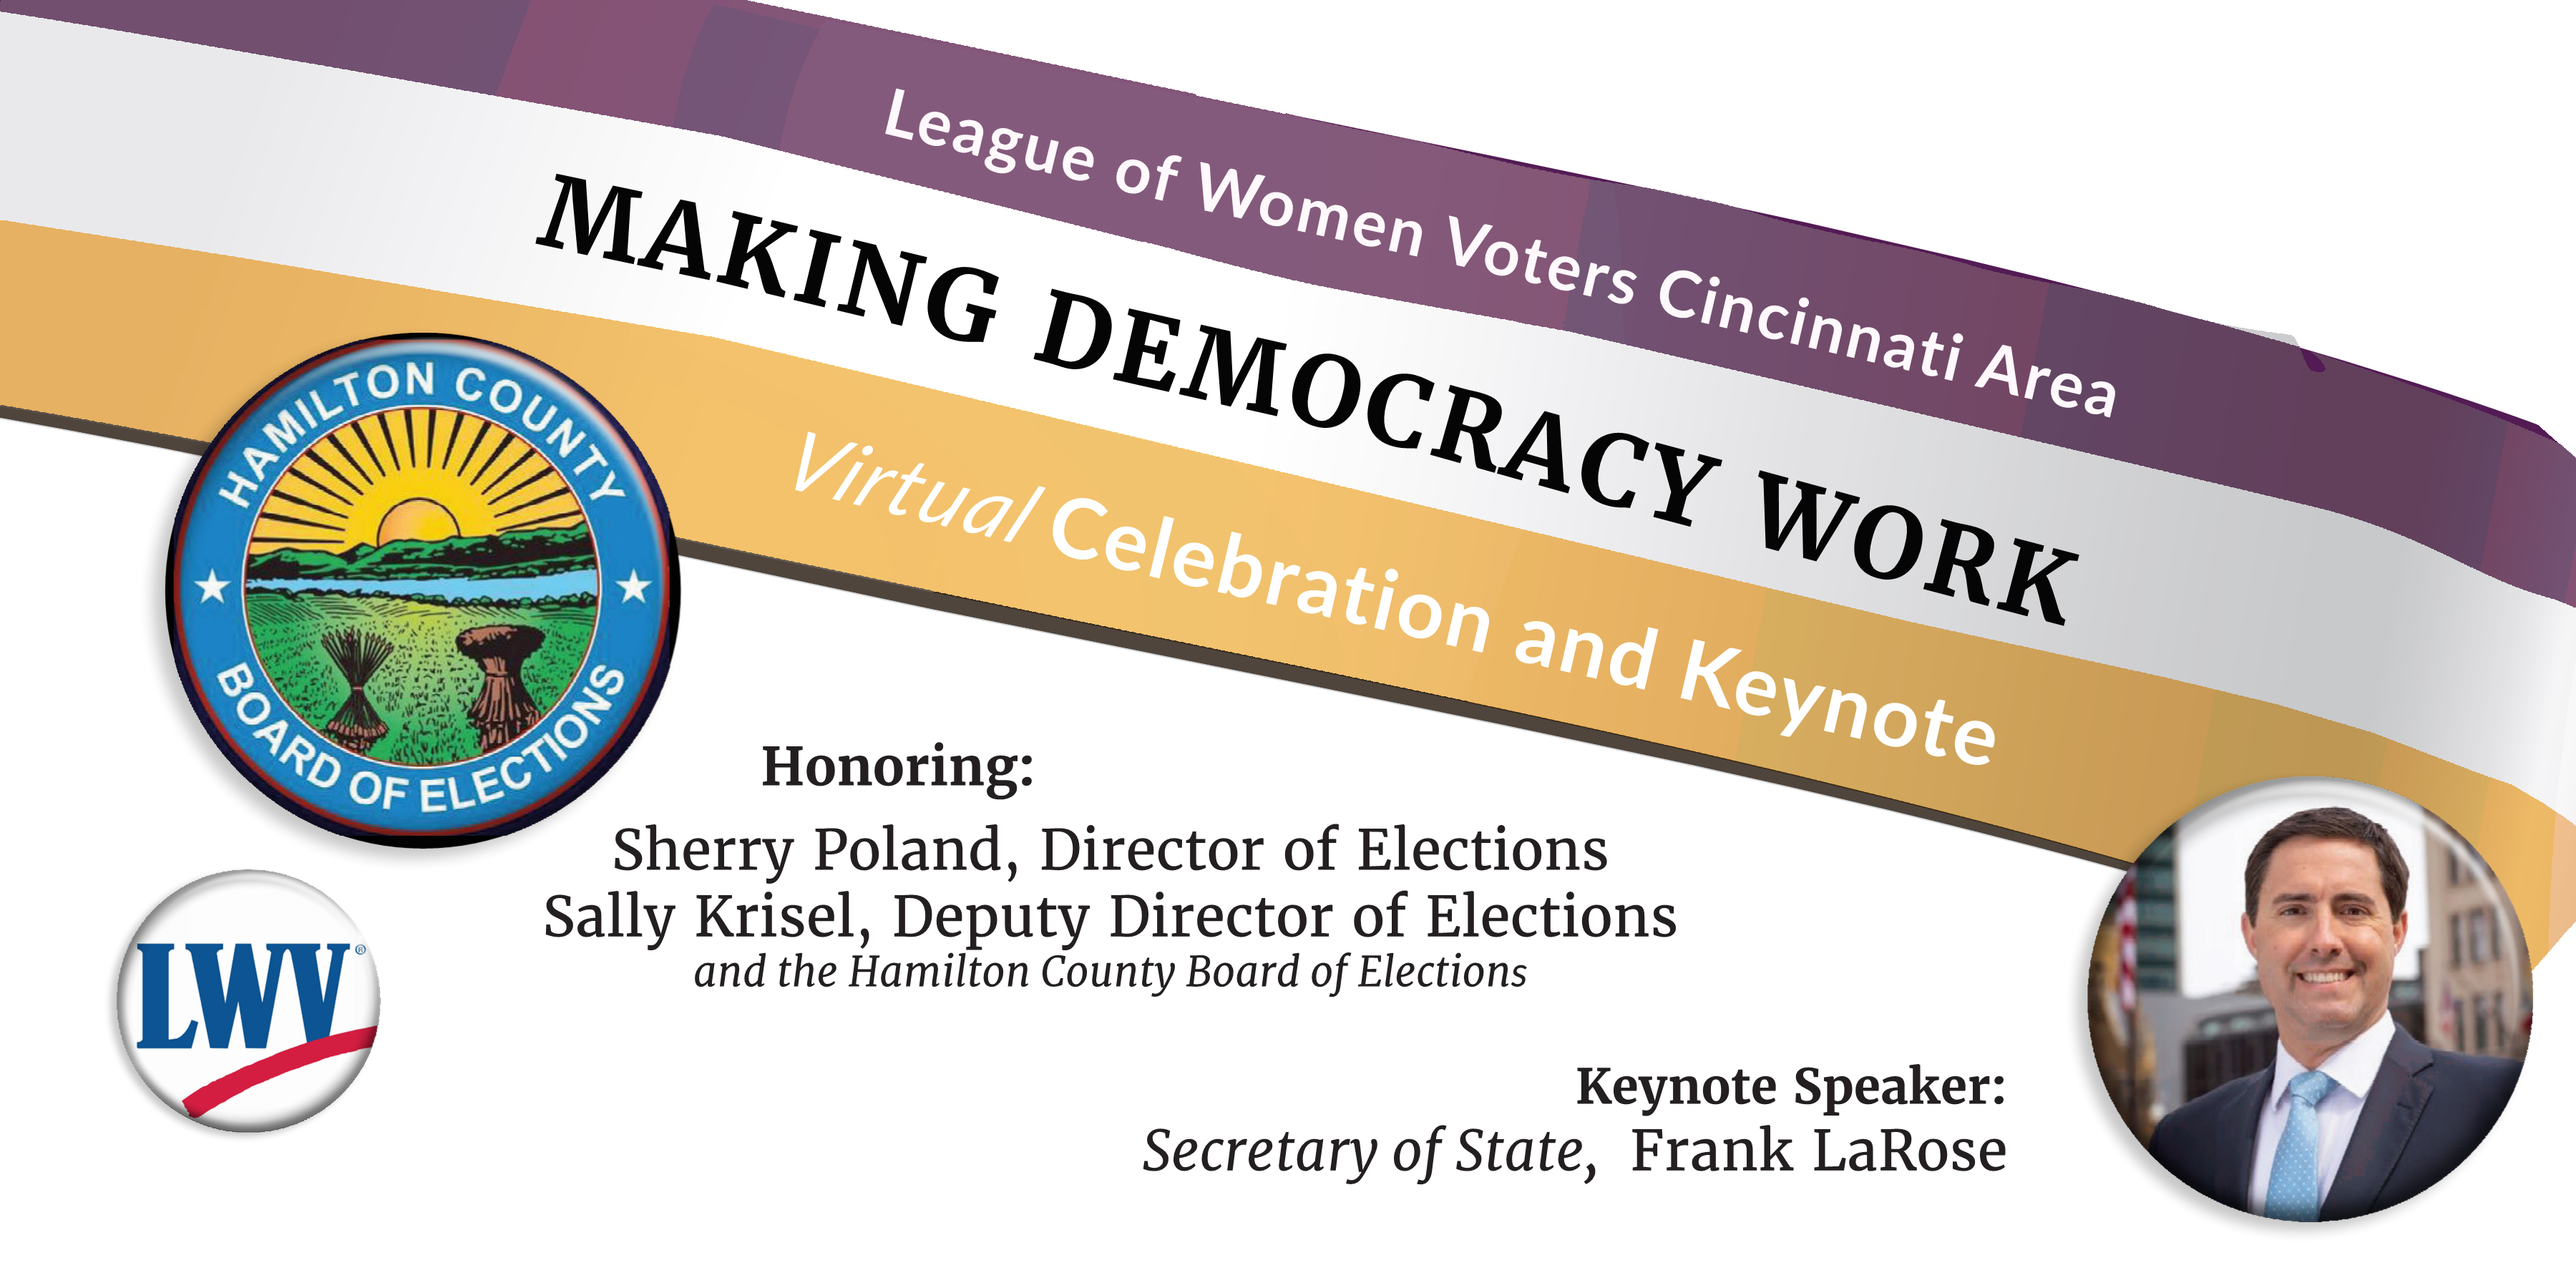 Purple, White and gold banner "League of Women Voters Cincinnati Area Making Democracy Work Celebration"